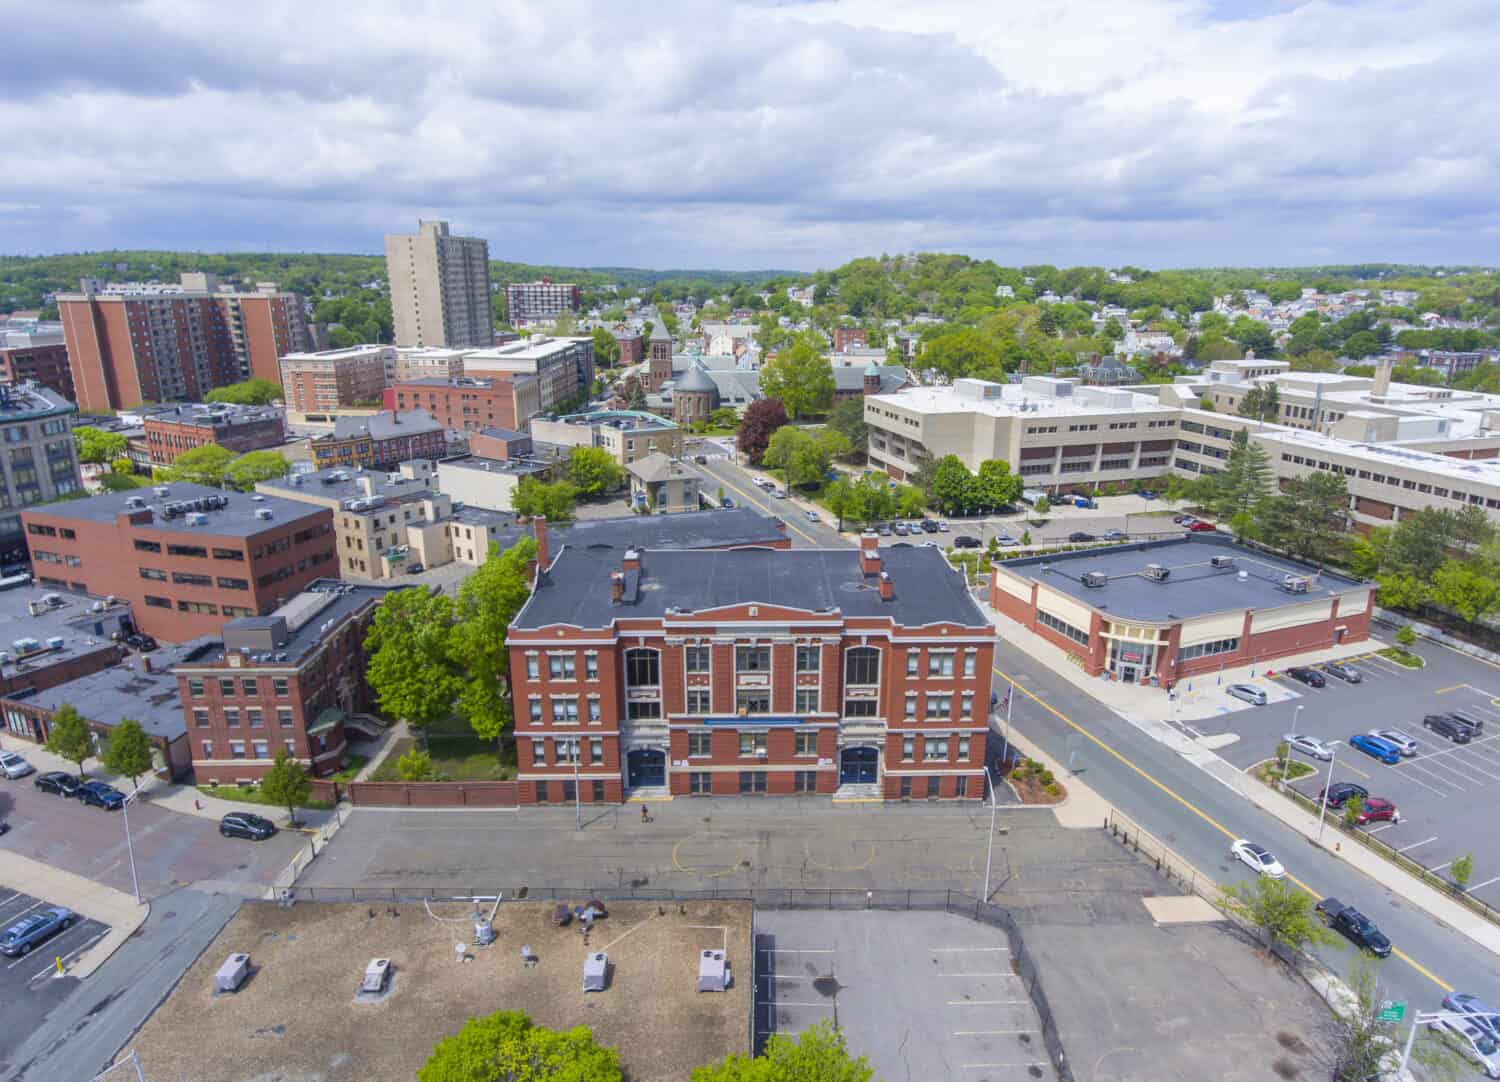 Cheverus School aerial view on Centre Street in downtown Malden, Massachusetts MA, USA.